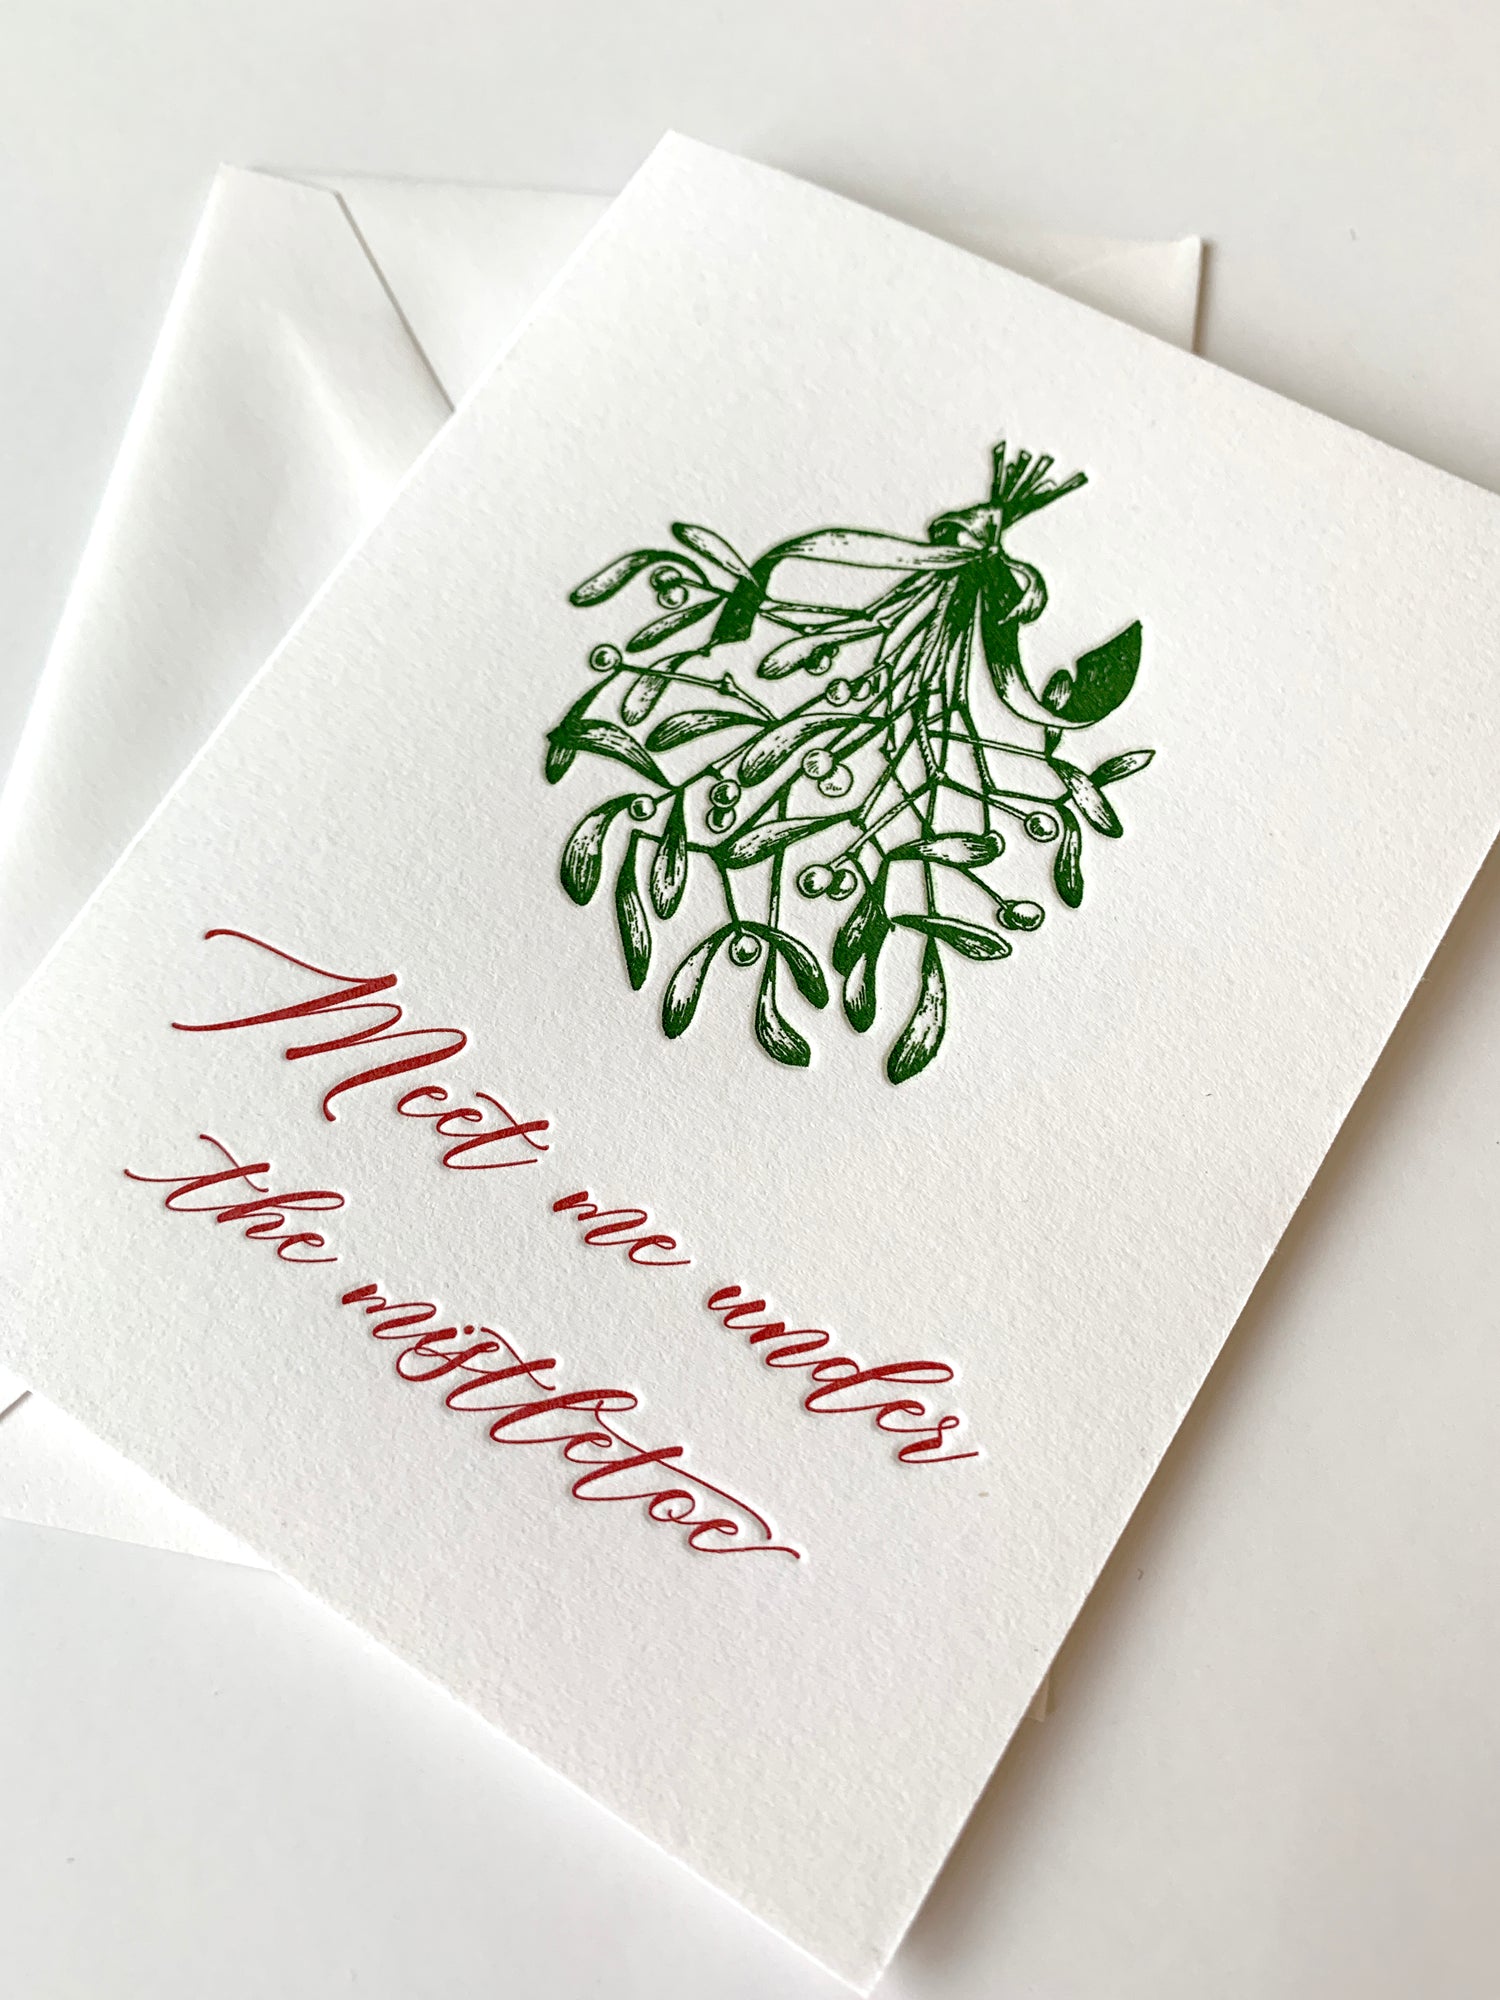 Letterpress holiday card with mistletoe that says "Meet me under the mistletoe" by Rust Belt Love